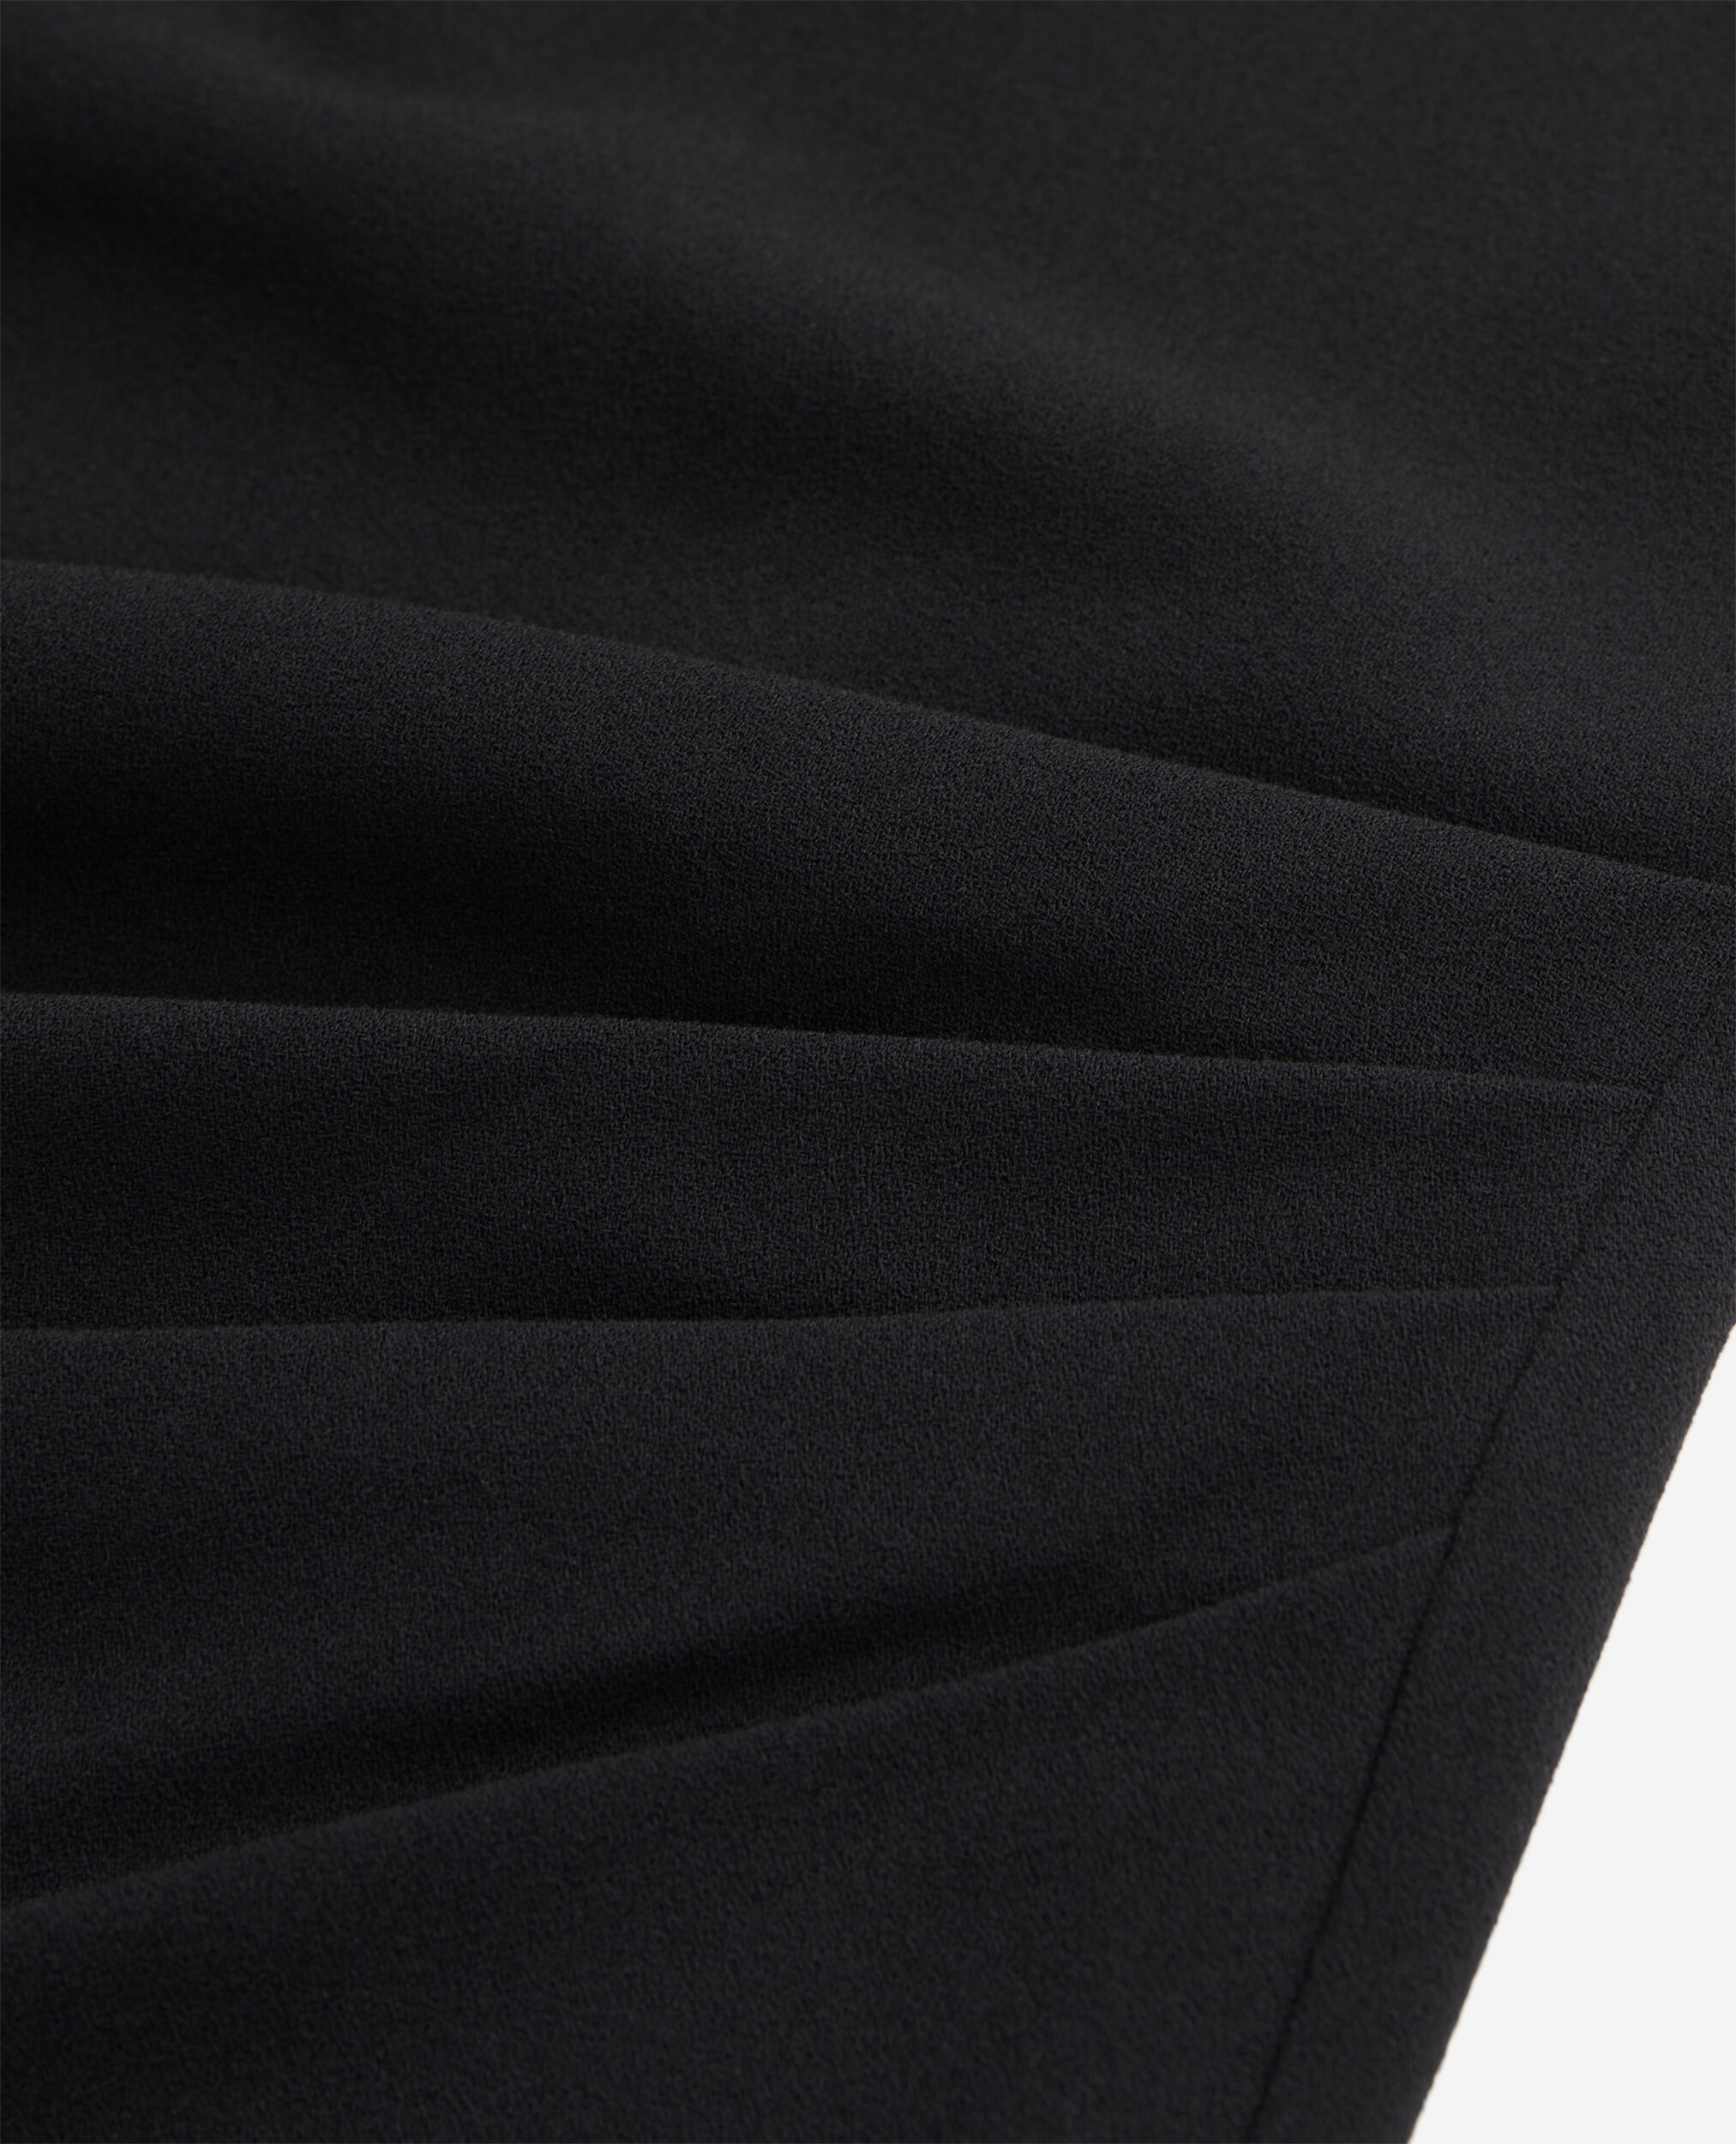 Vestido corto negro crepé cremallera, BLACK, hi-res image number null